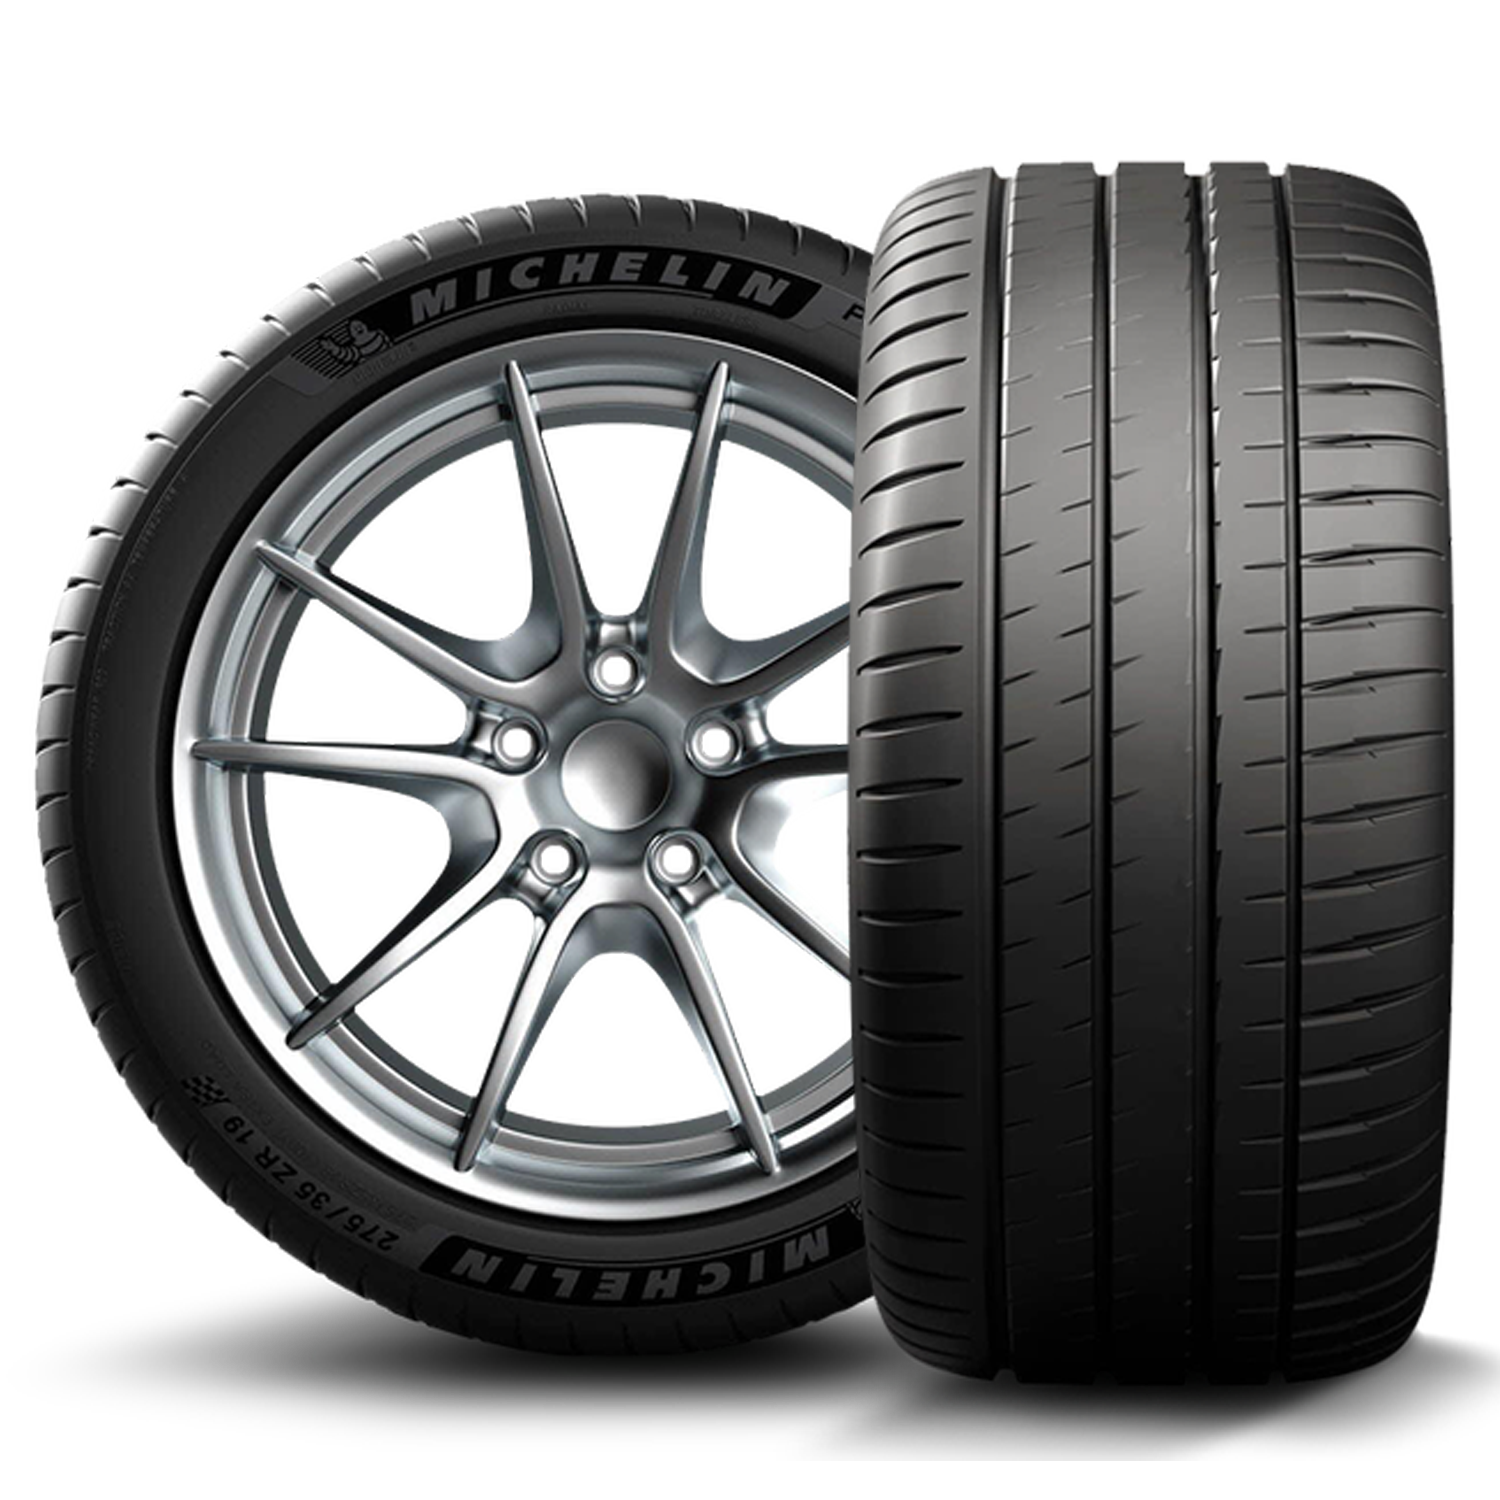 Michelin Pilot Sport 4S Performance 215/45ZR17 (91Y) XL Passenger Tire - image 2 of 5